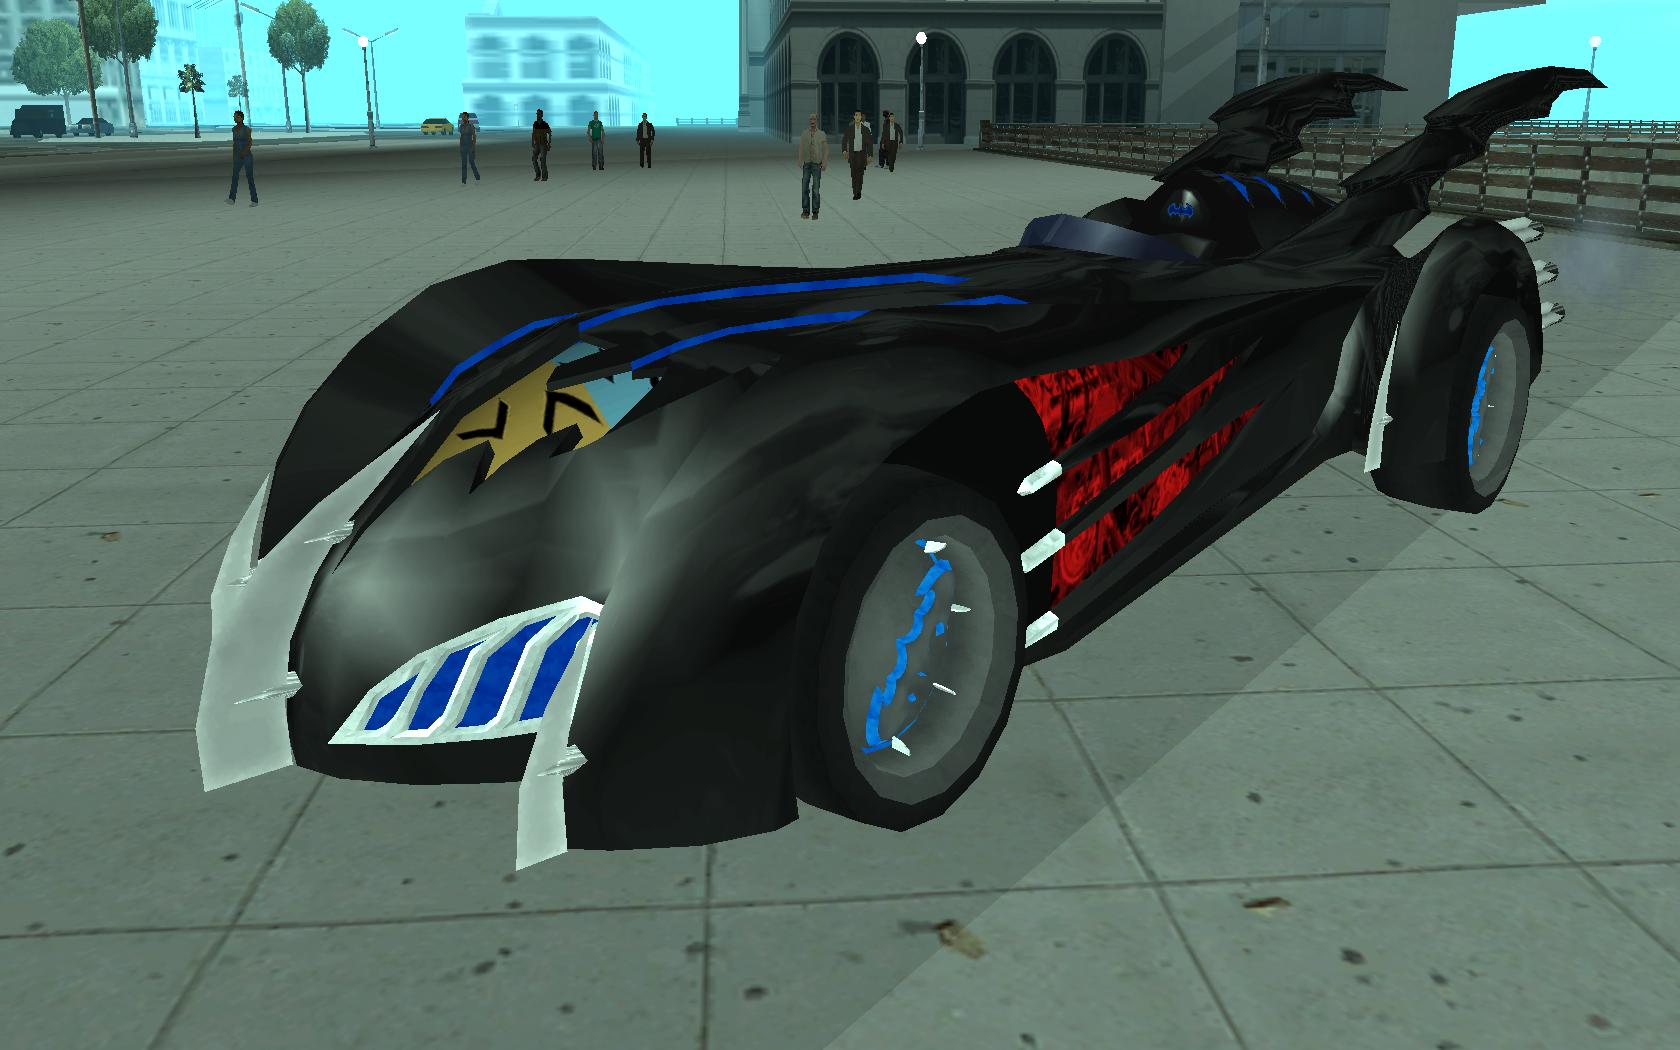 Batman and Robin vehicle image - GTA: Gotham City mod for Grand Theft Auto:  San Andreas - Mod DB